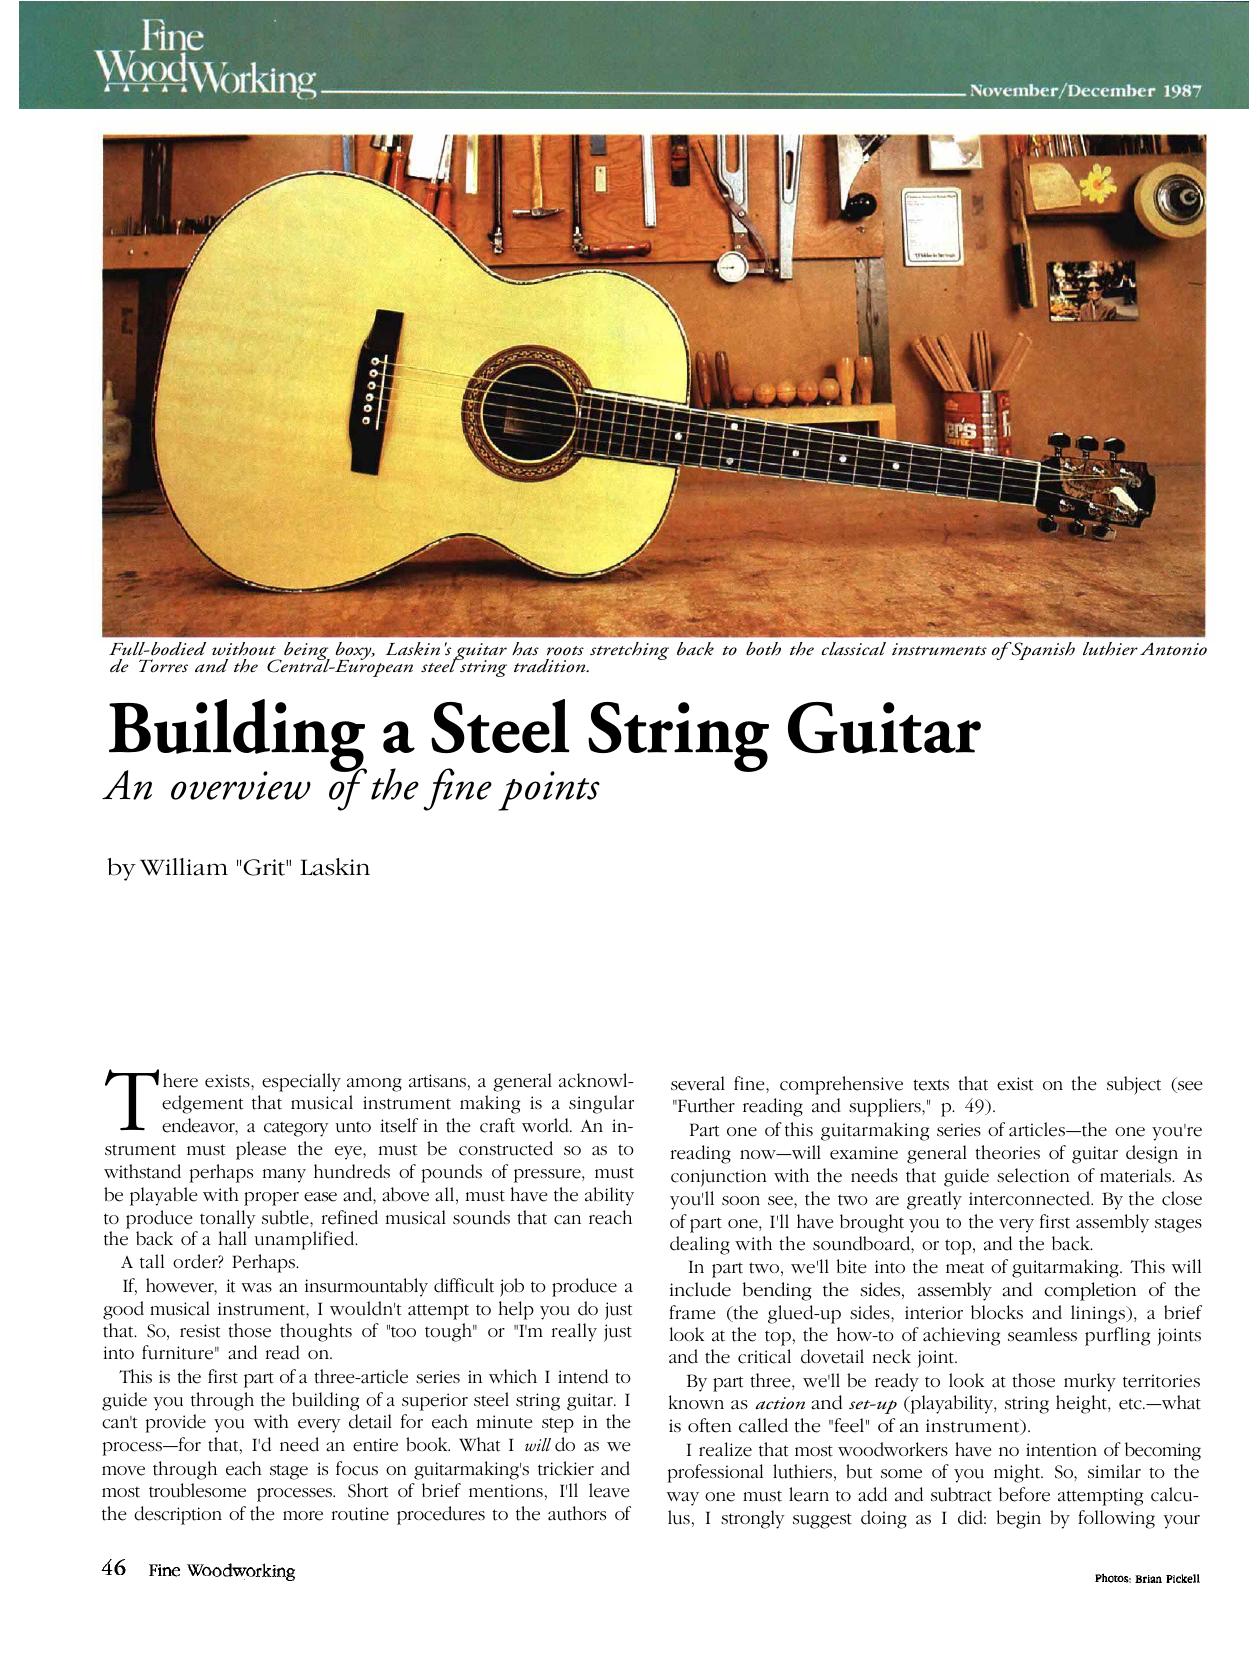 Building a Steel String Guitar by William Grit Laskin